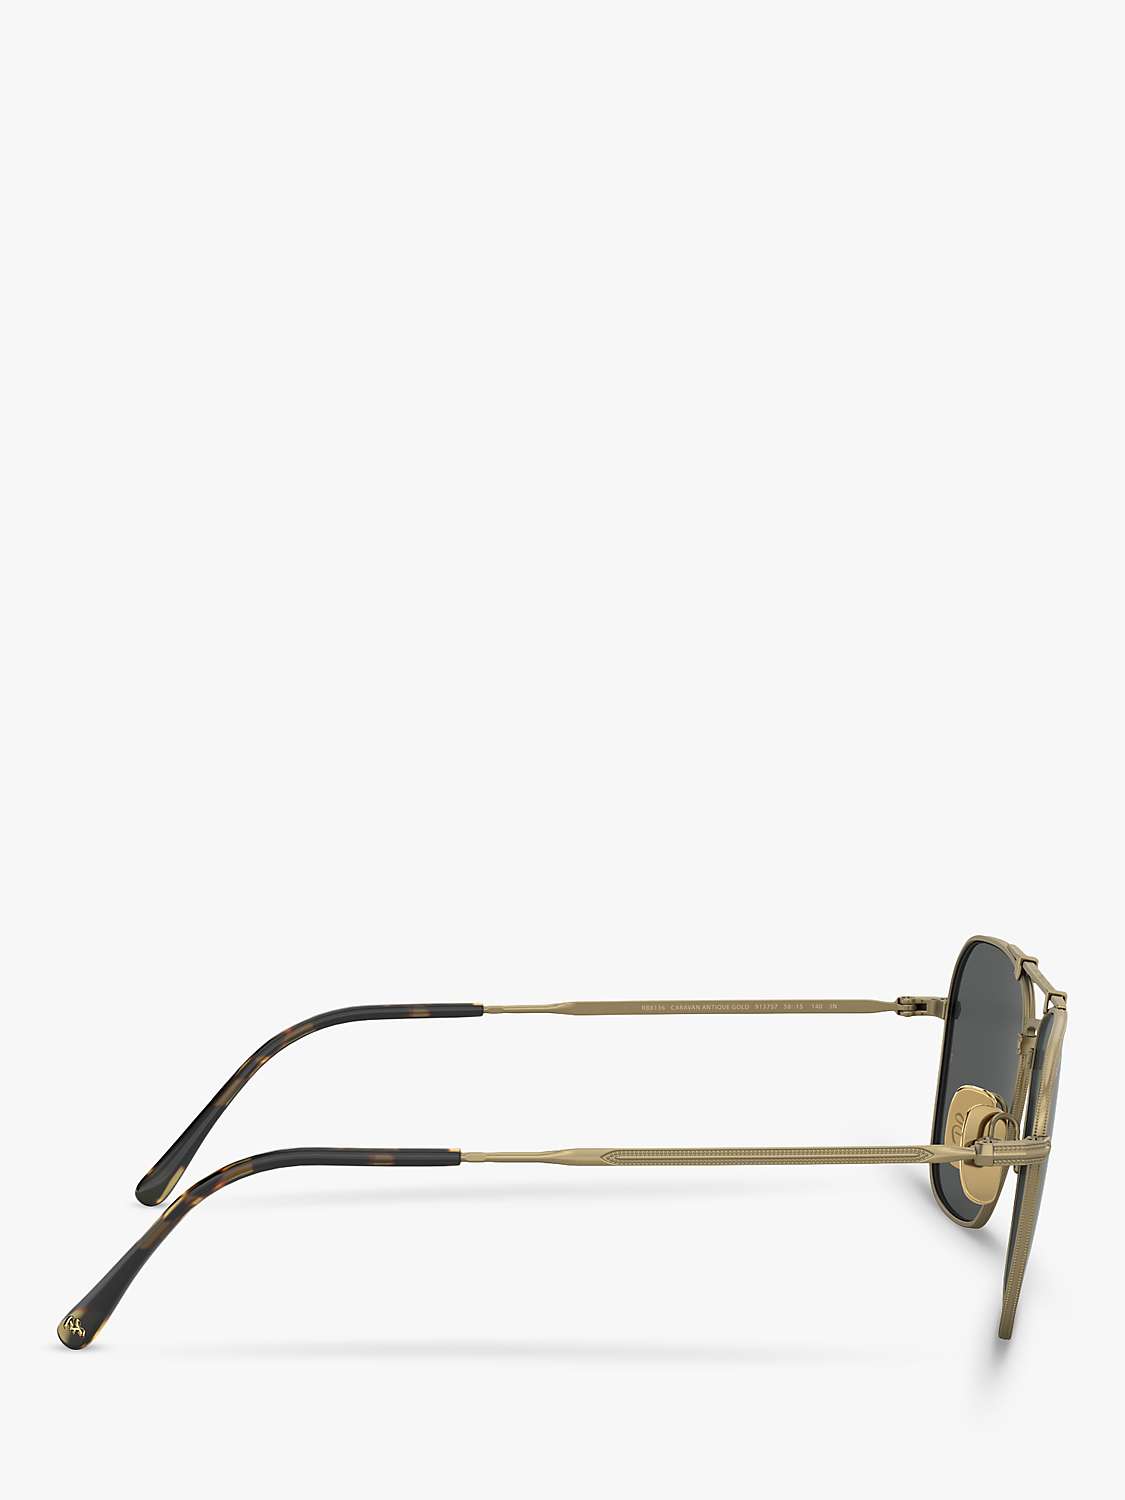 Buy Ray-Ban RB8136 Unisex D-Frame Sunglasses Online at johnlewis.com